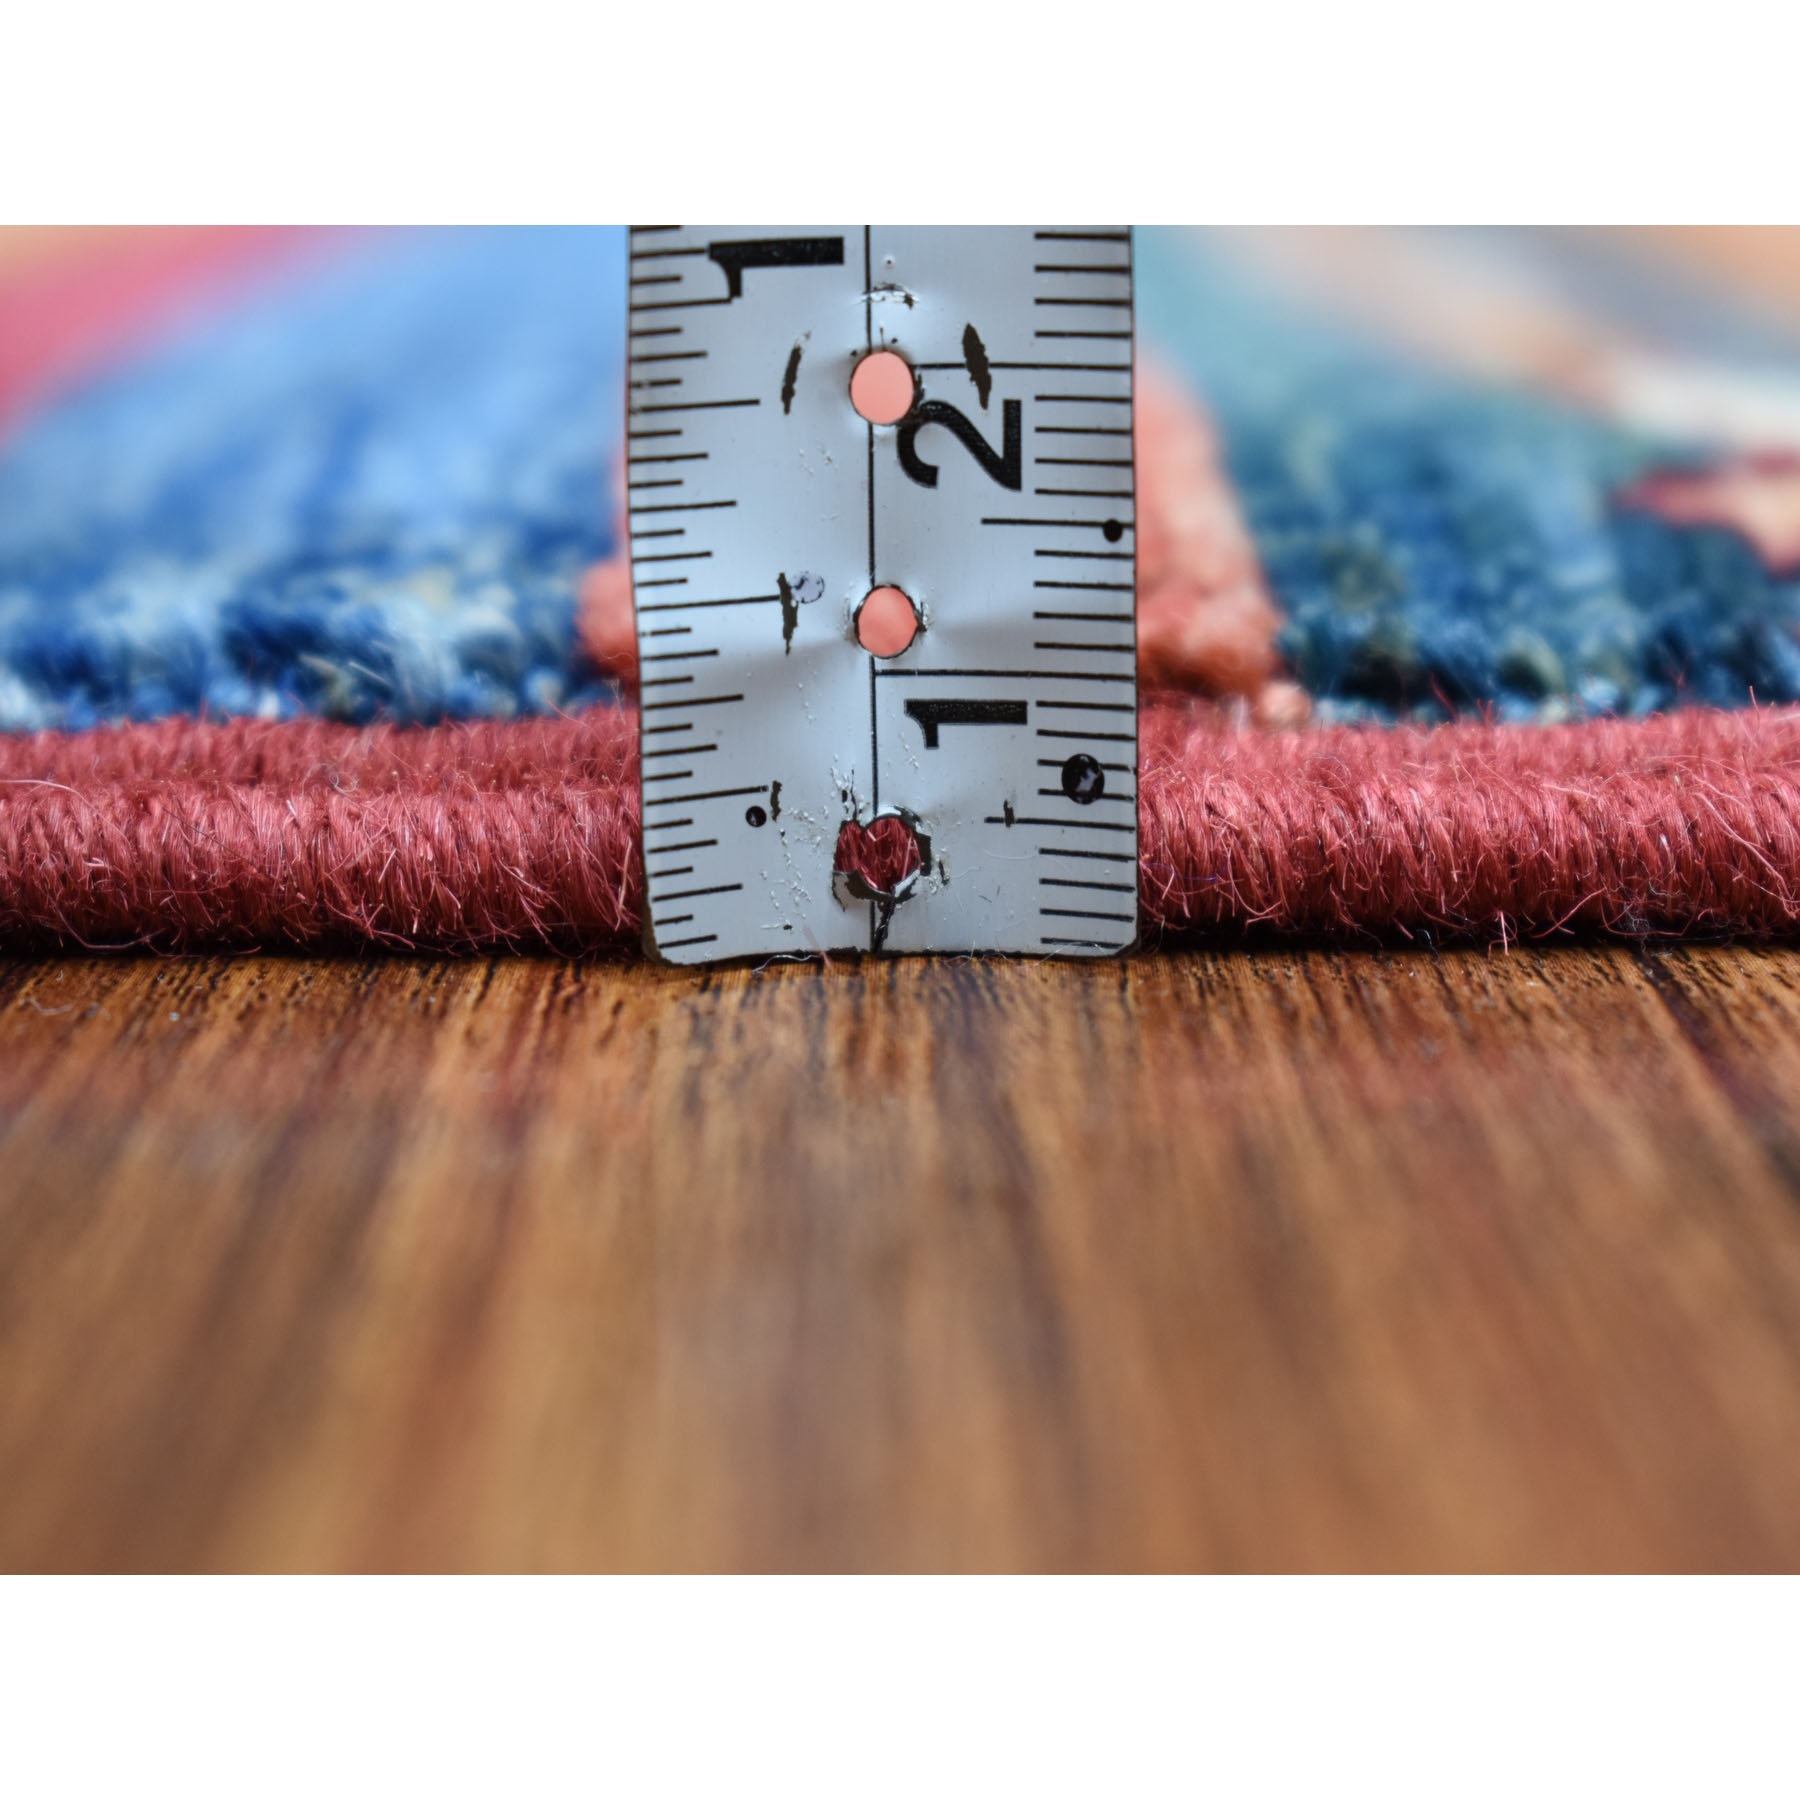 2-2 x10- Red Khorjin Design Runner Super Kazak Geometric Pure Wool Hand Knotted Oriental Rug 